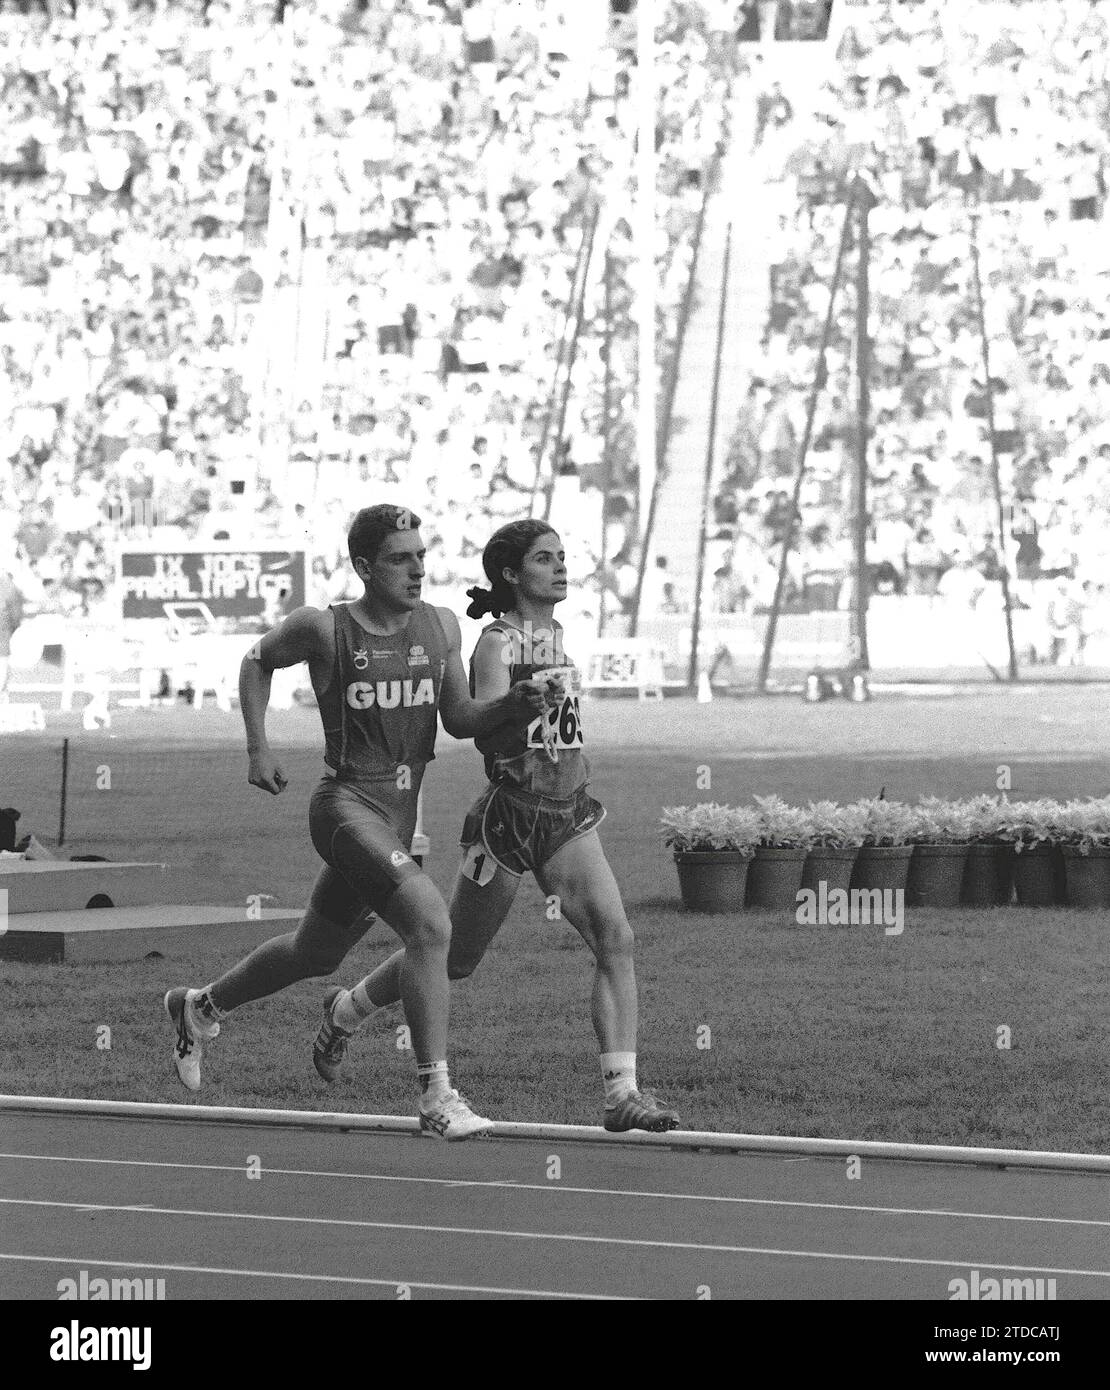 Barcelona..September 1992..Paralympic Games...Photo Jordi Romeu...Archdc....Athletics events for the Blind. Credit: Album / Archivo ABC / Jordi Romeu Stock Photo